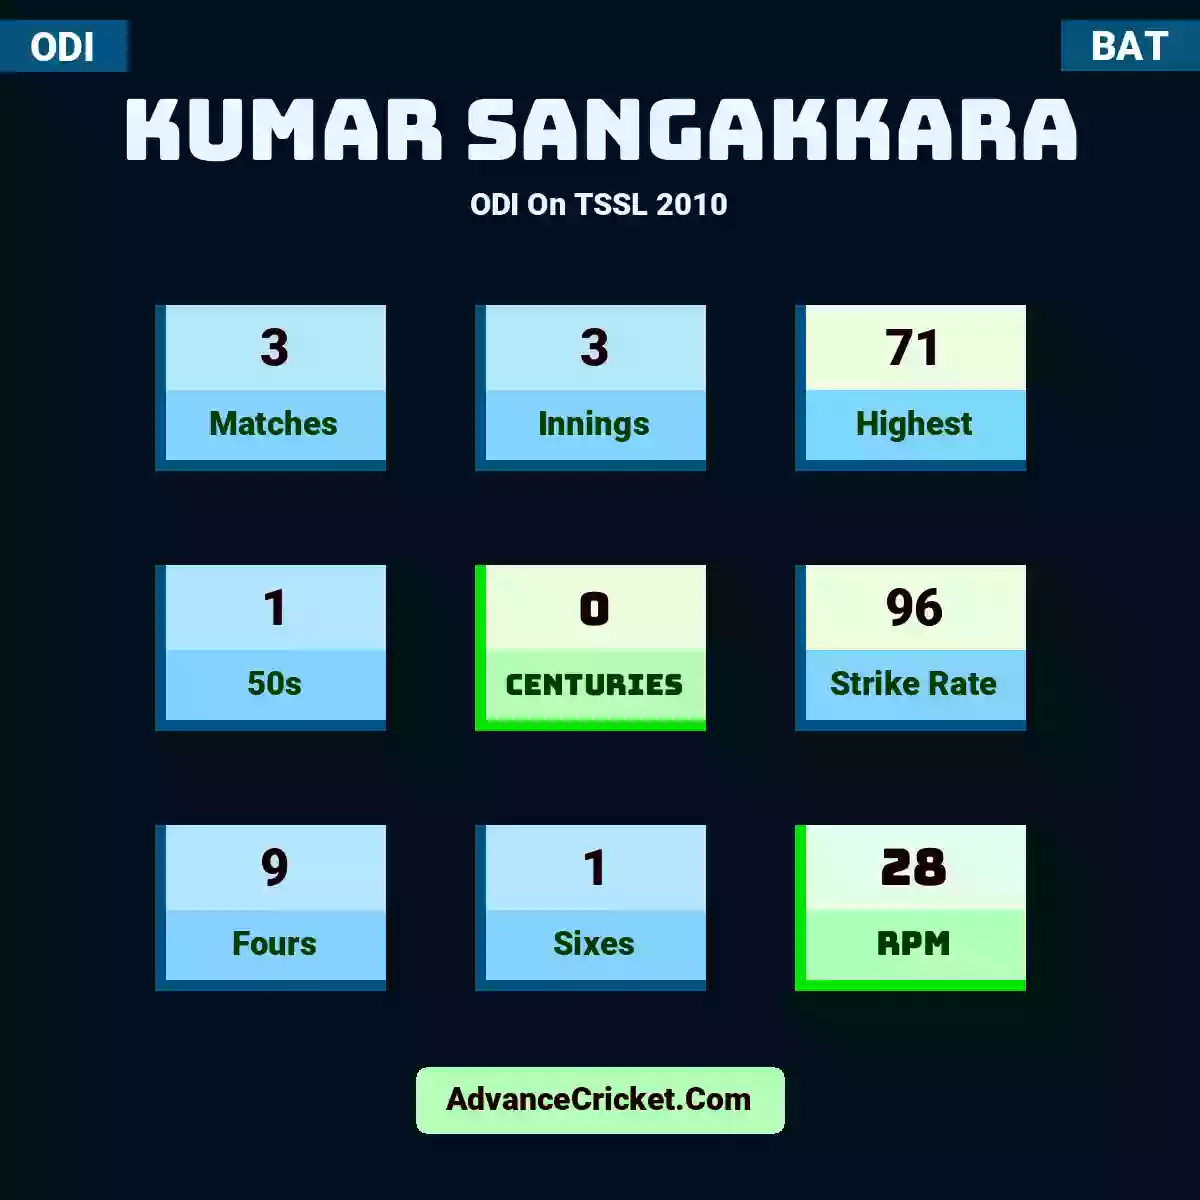 Kumar Sangakkara ODI  On TSSL 2010, Kumar Sangakkara played 3 matches, scored 71 runs as highest, 1 half-centuries, and 0 centuries, with a strike rate of 96. K.Sangakkara hit 9 fours and 1 sixes, with an RPM of 28.